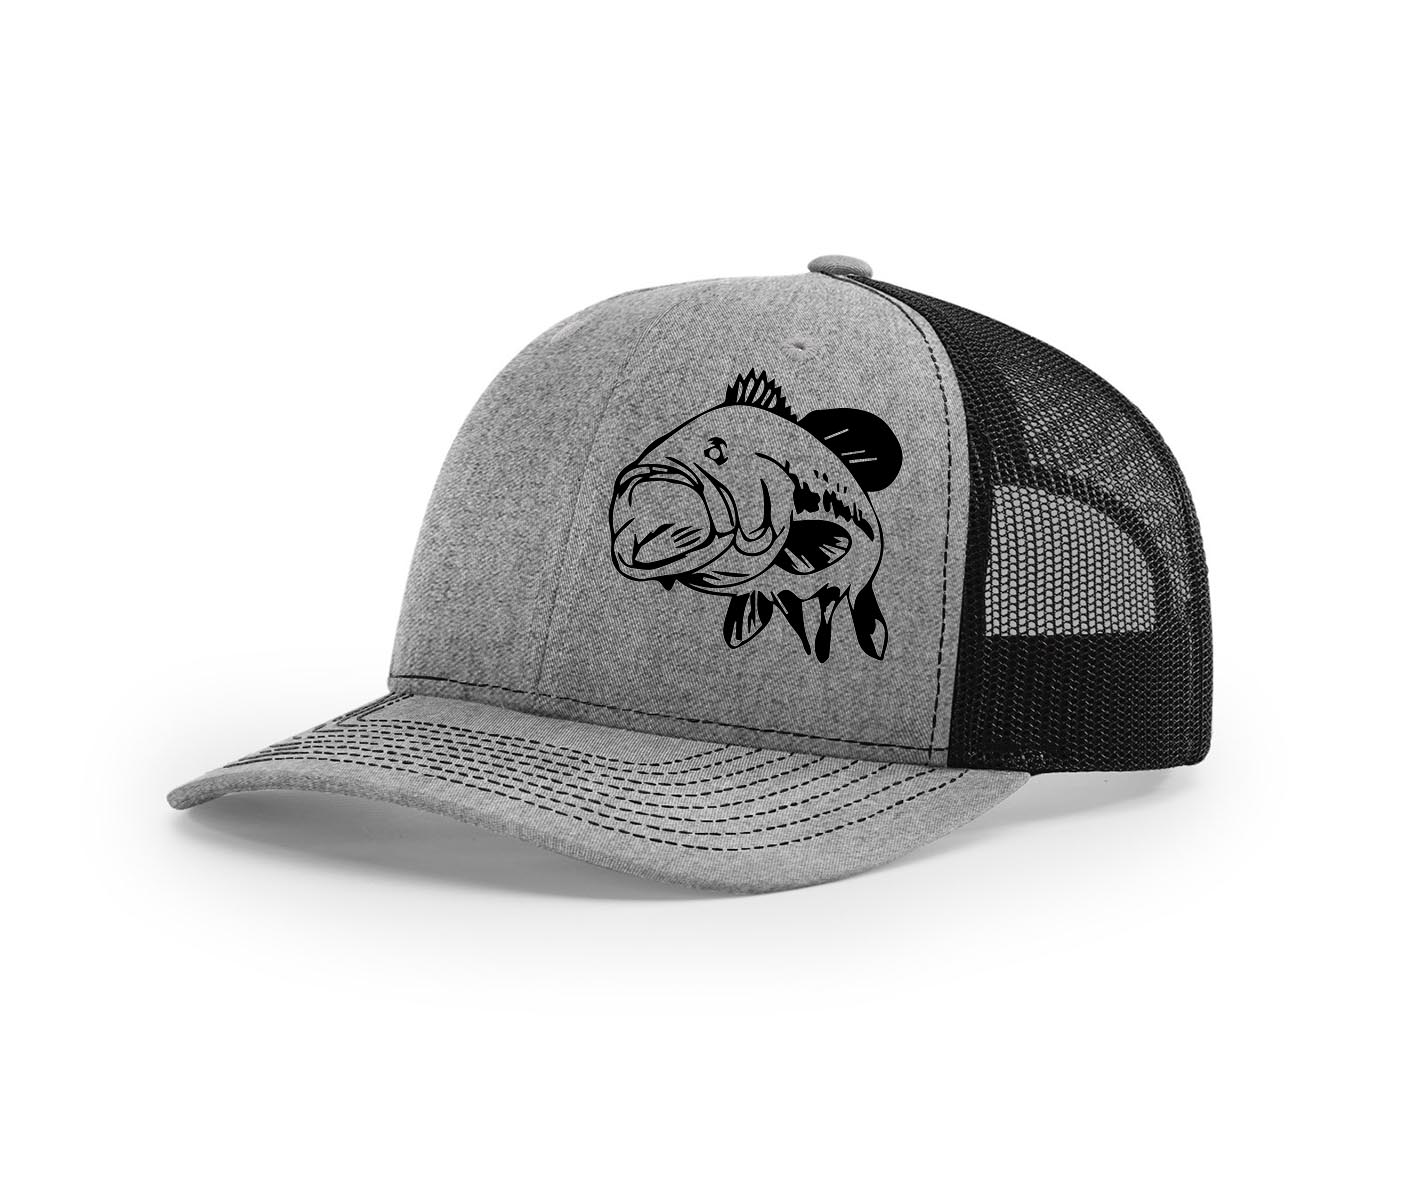 Bass Fishing Trucker Cap Baseball Caps Cool Summer Fisherman Mesh Net Hat Funny As Picture